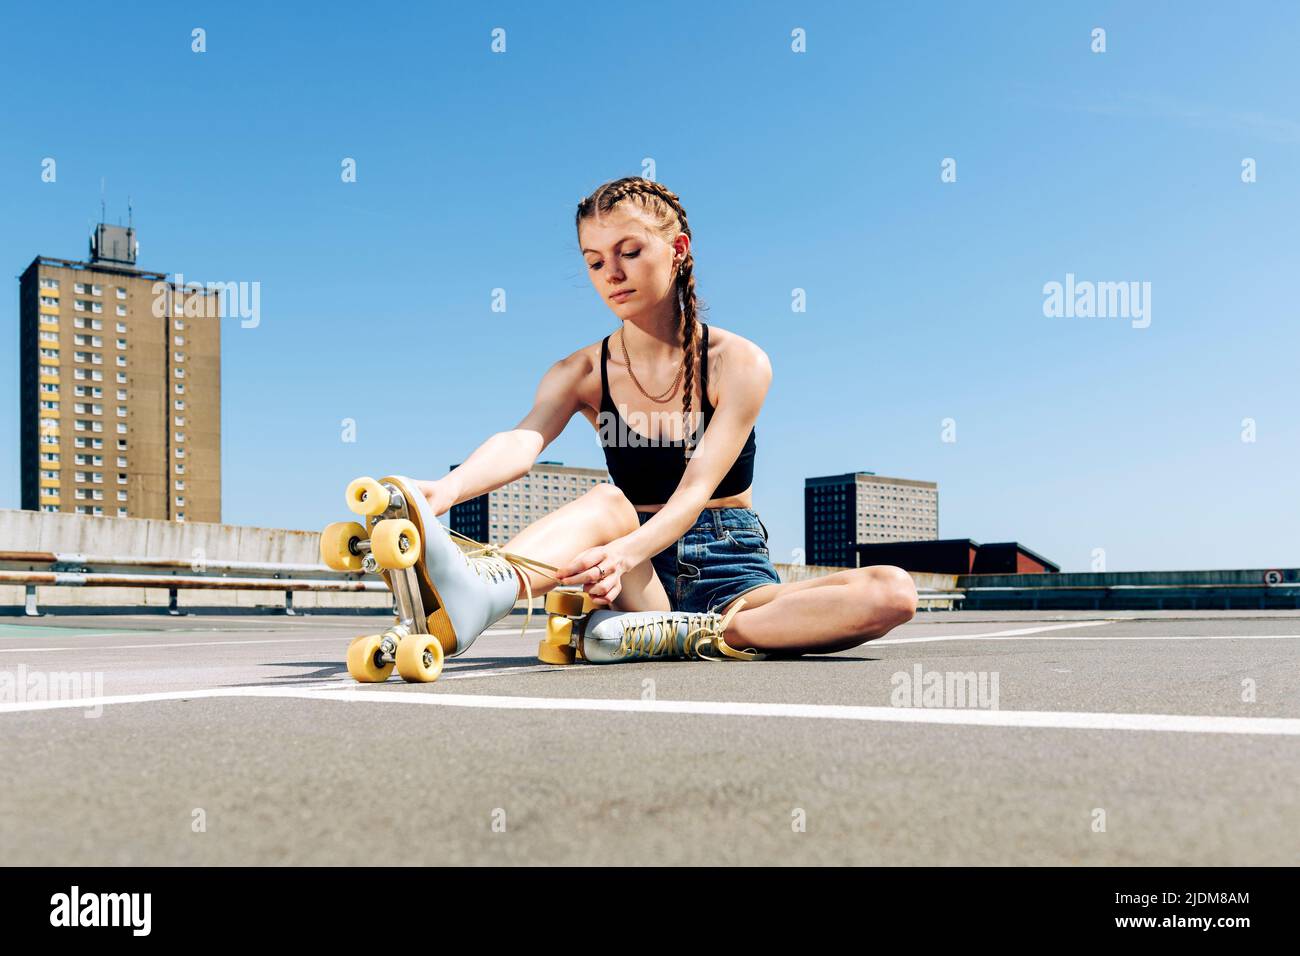 Girl tying up her roller skates, urban background Stock Photo